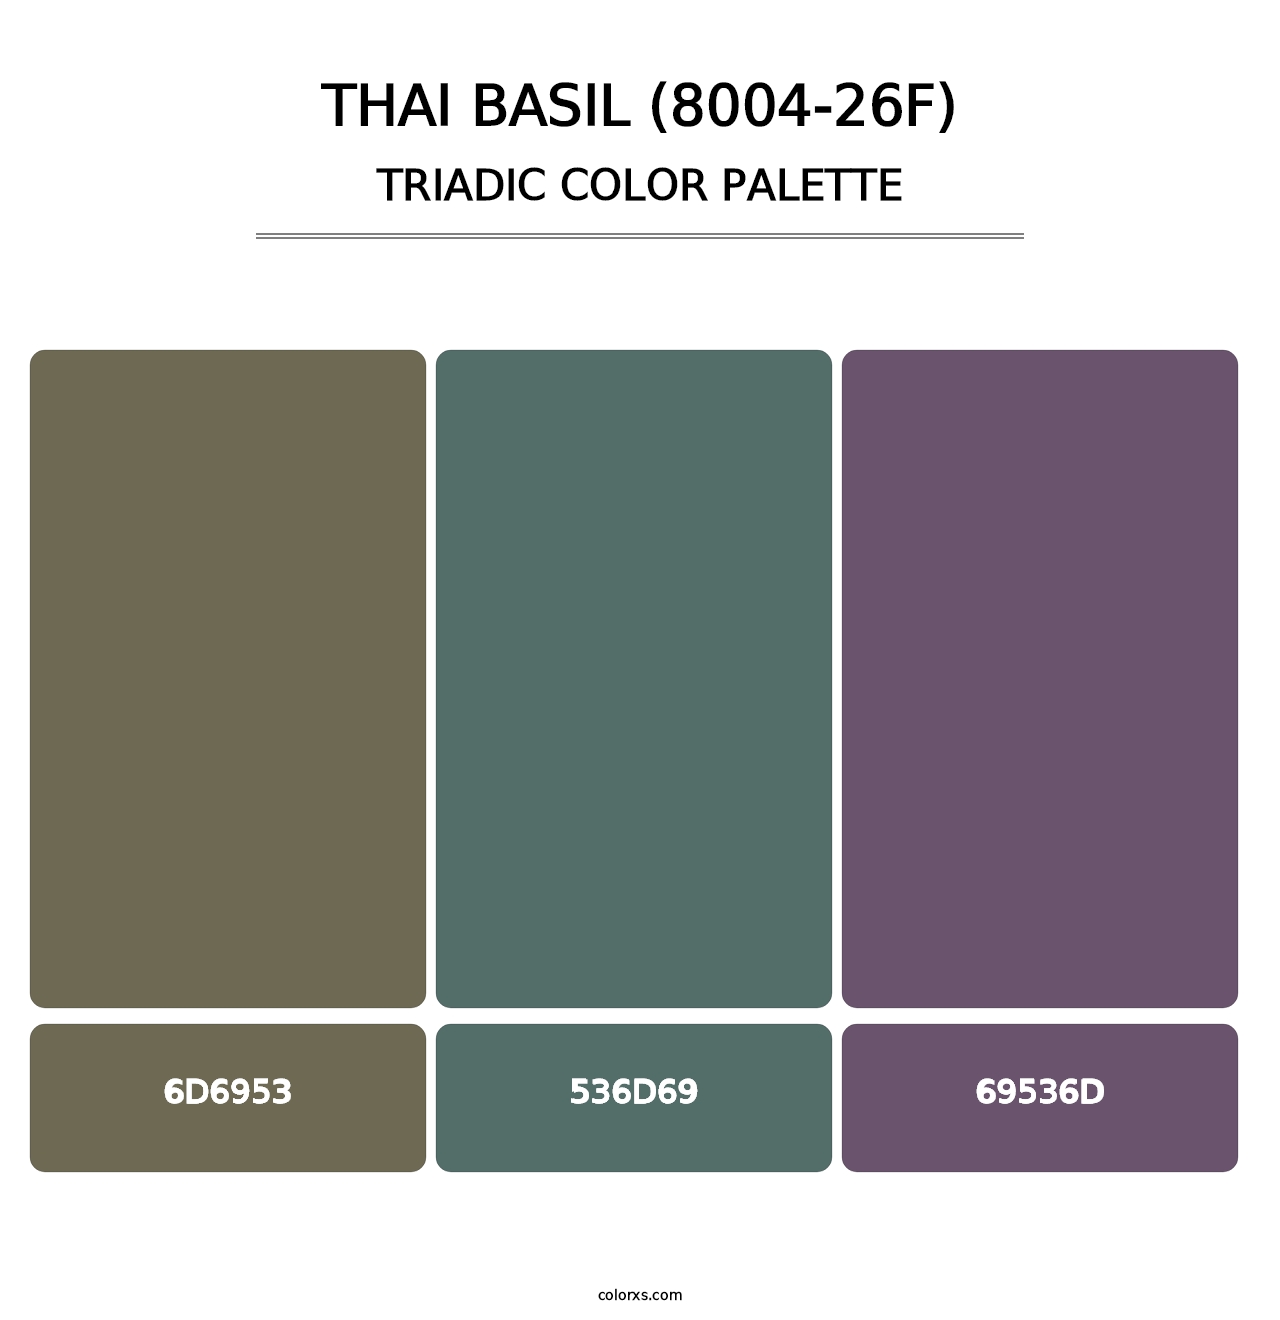 Thai Basil (8004-26F) - Triadic Color Palette